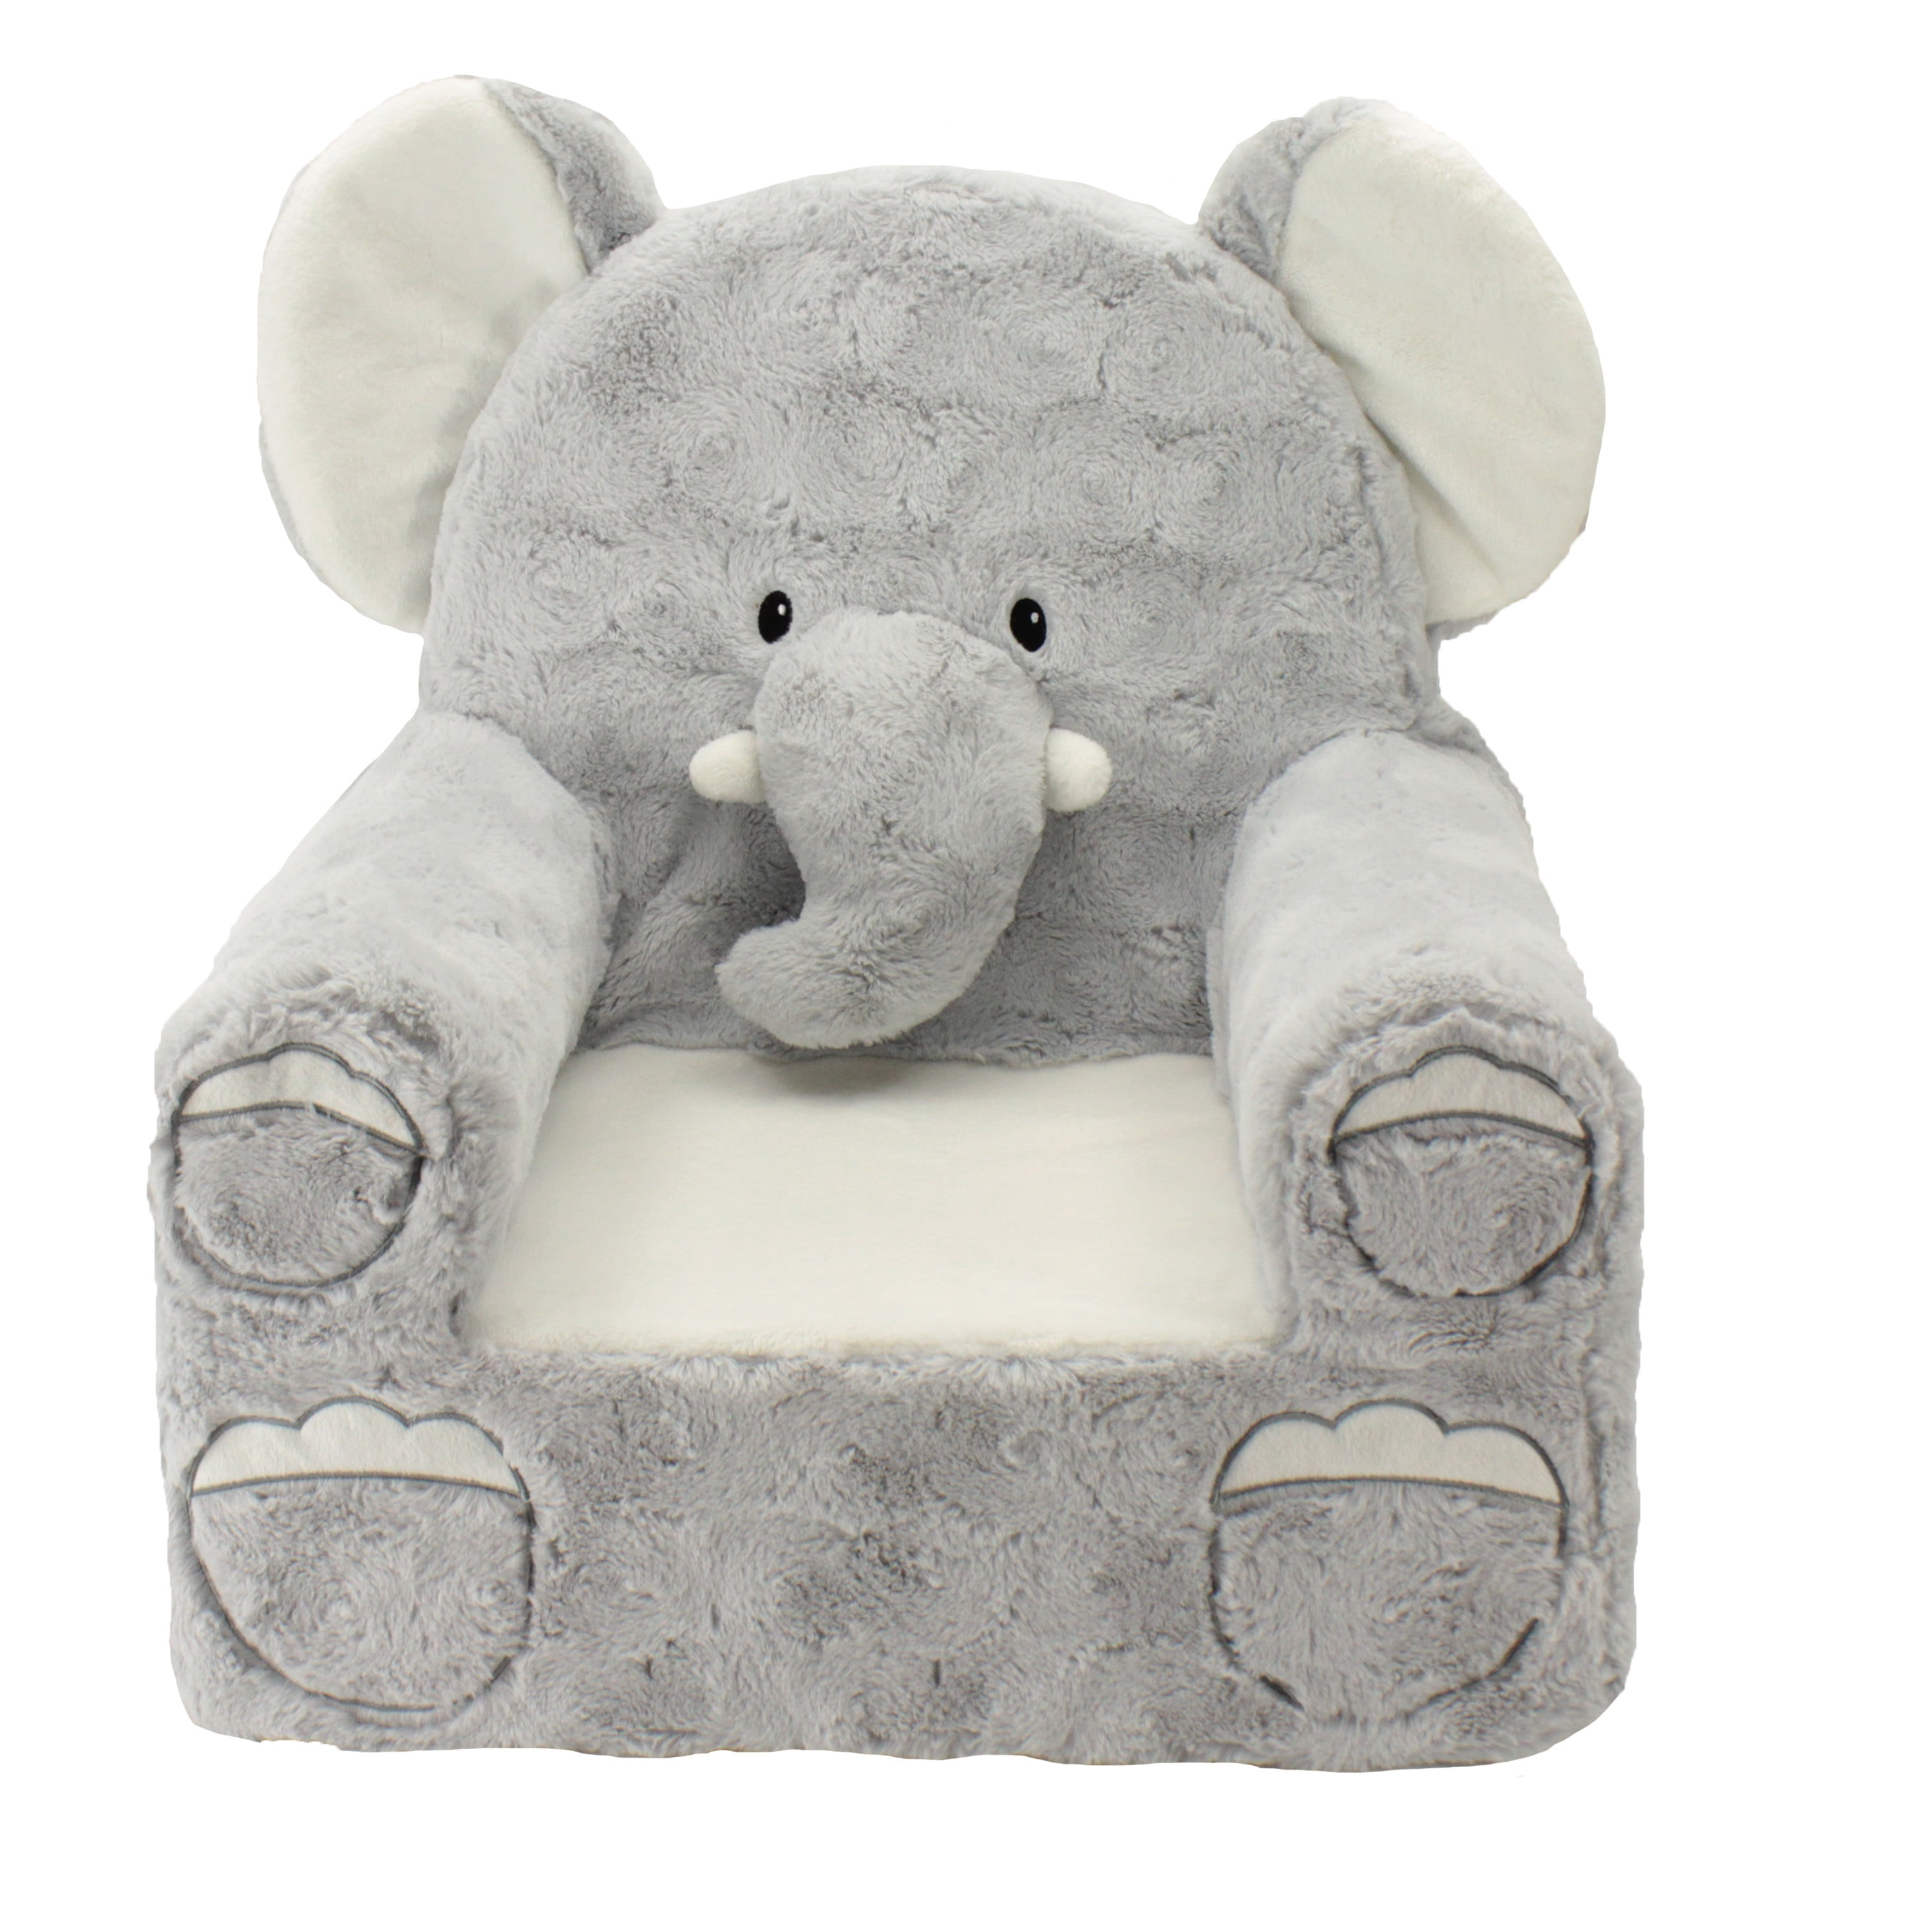 Retro Elephants Fabric Child's Chair Kid's Armchair Grey Nursery Bedroom Animals 